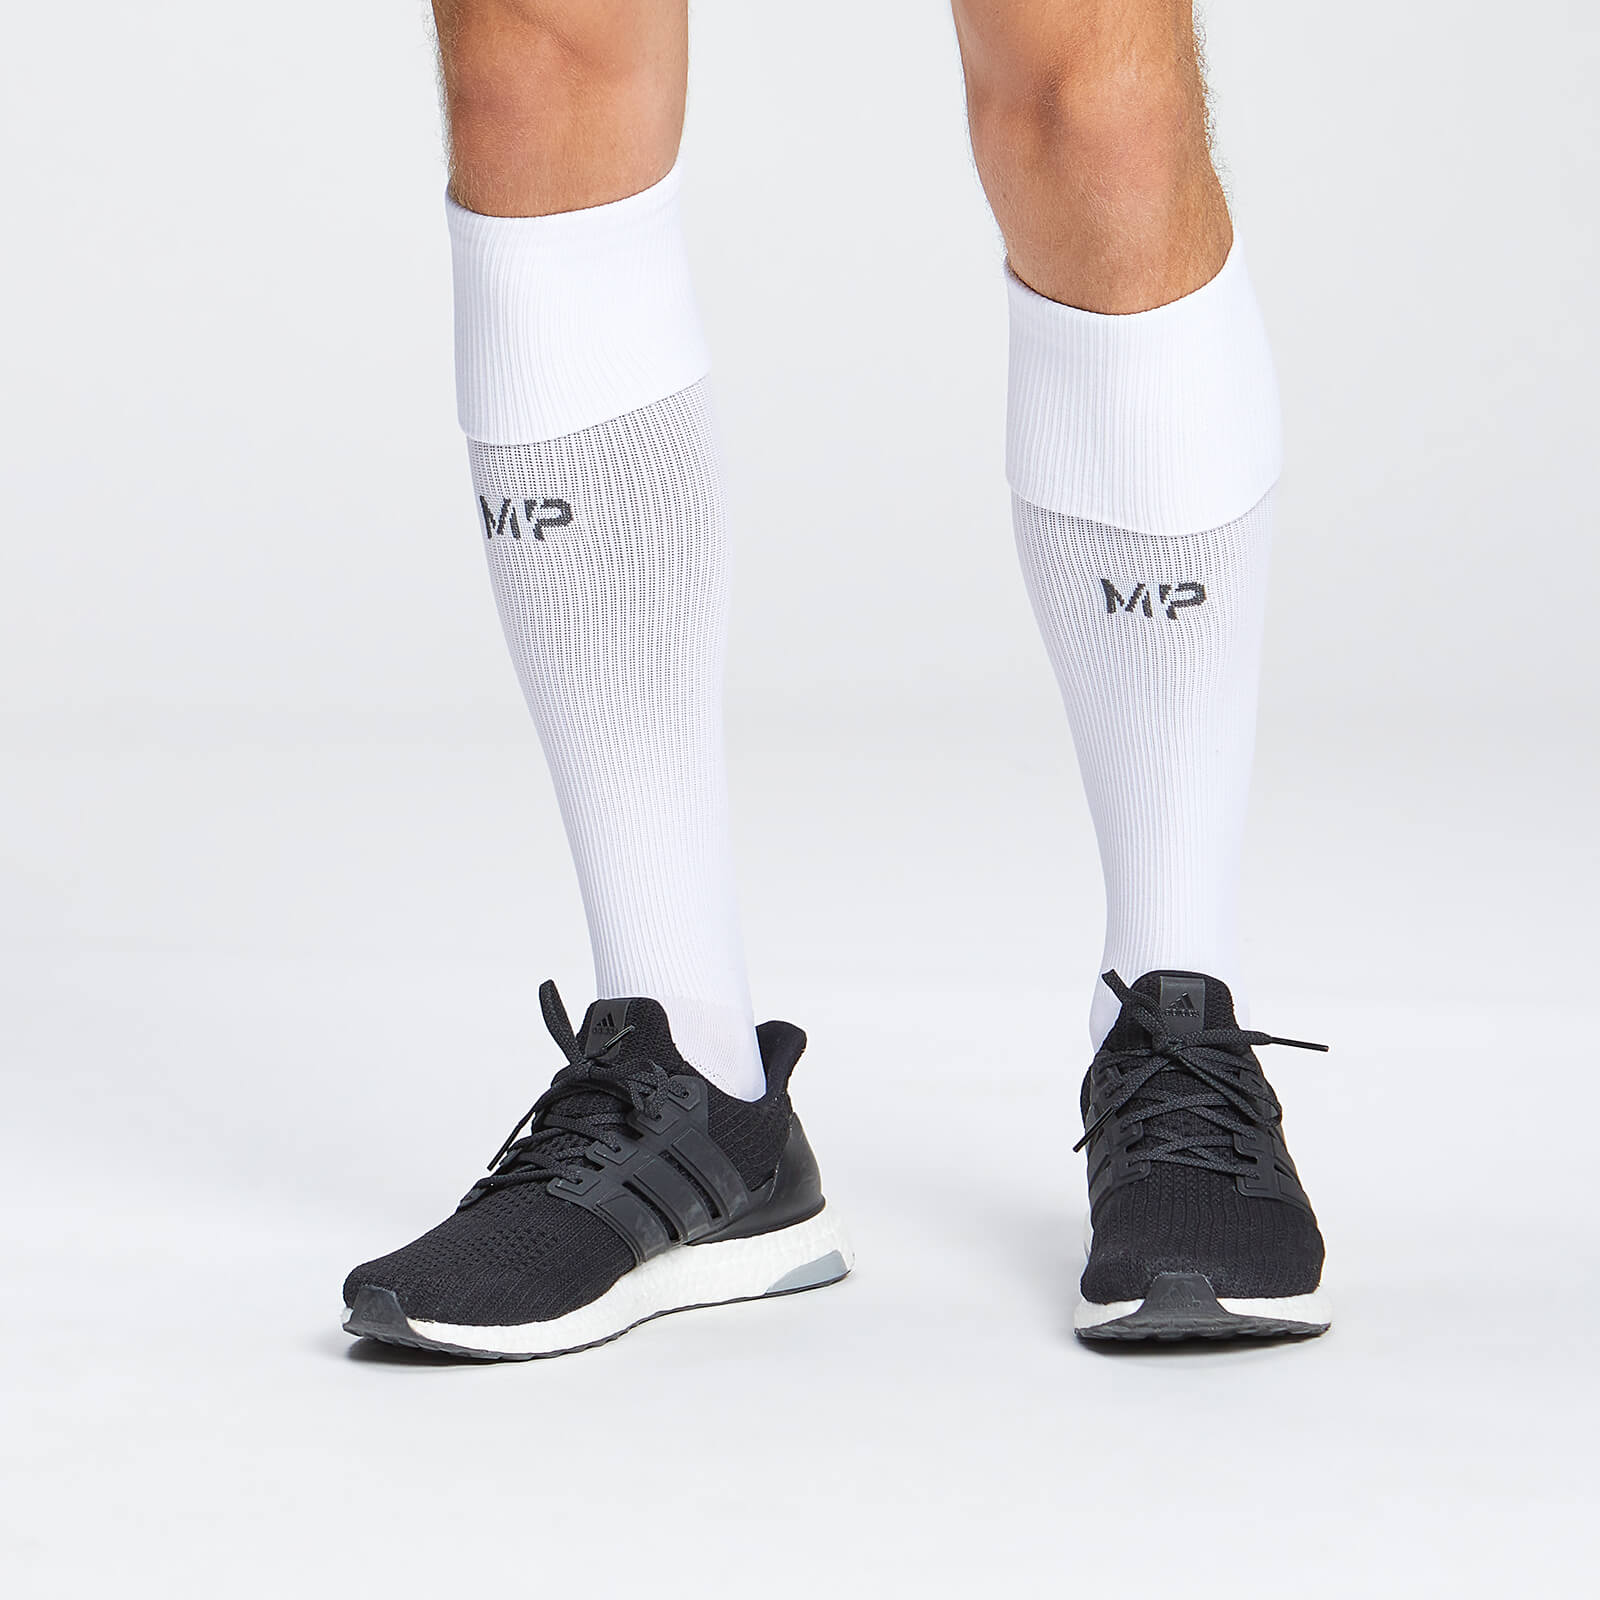 MP ถุงเท้าฟุตบอลข้อยาว – สีขาว